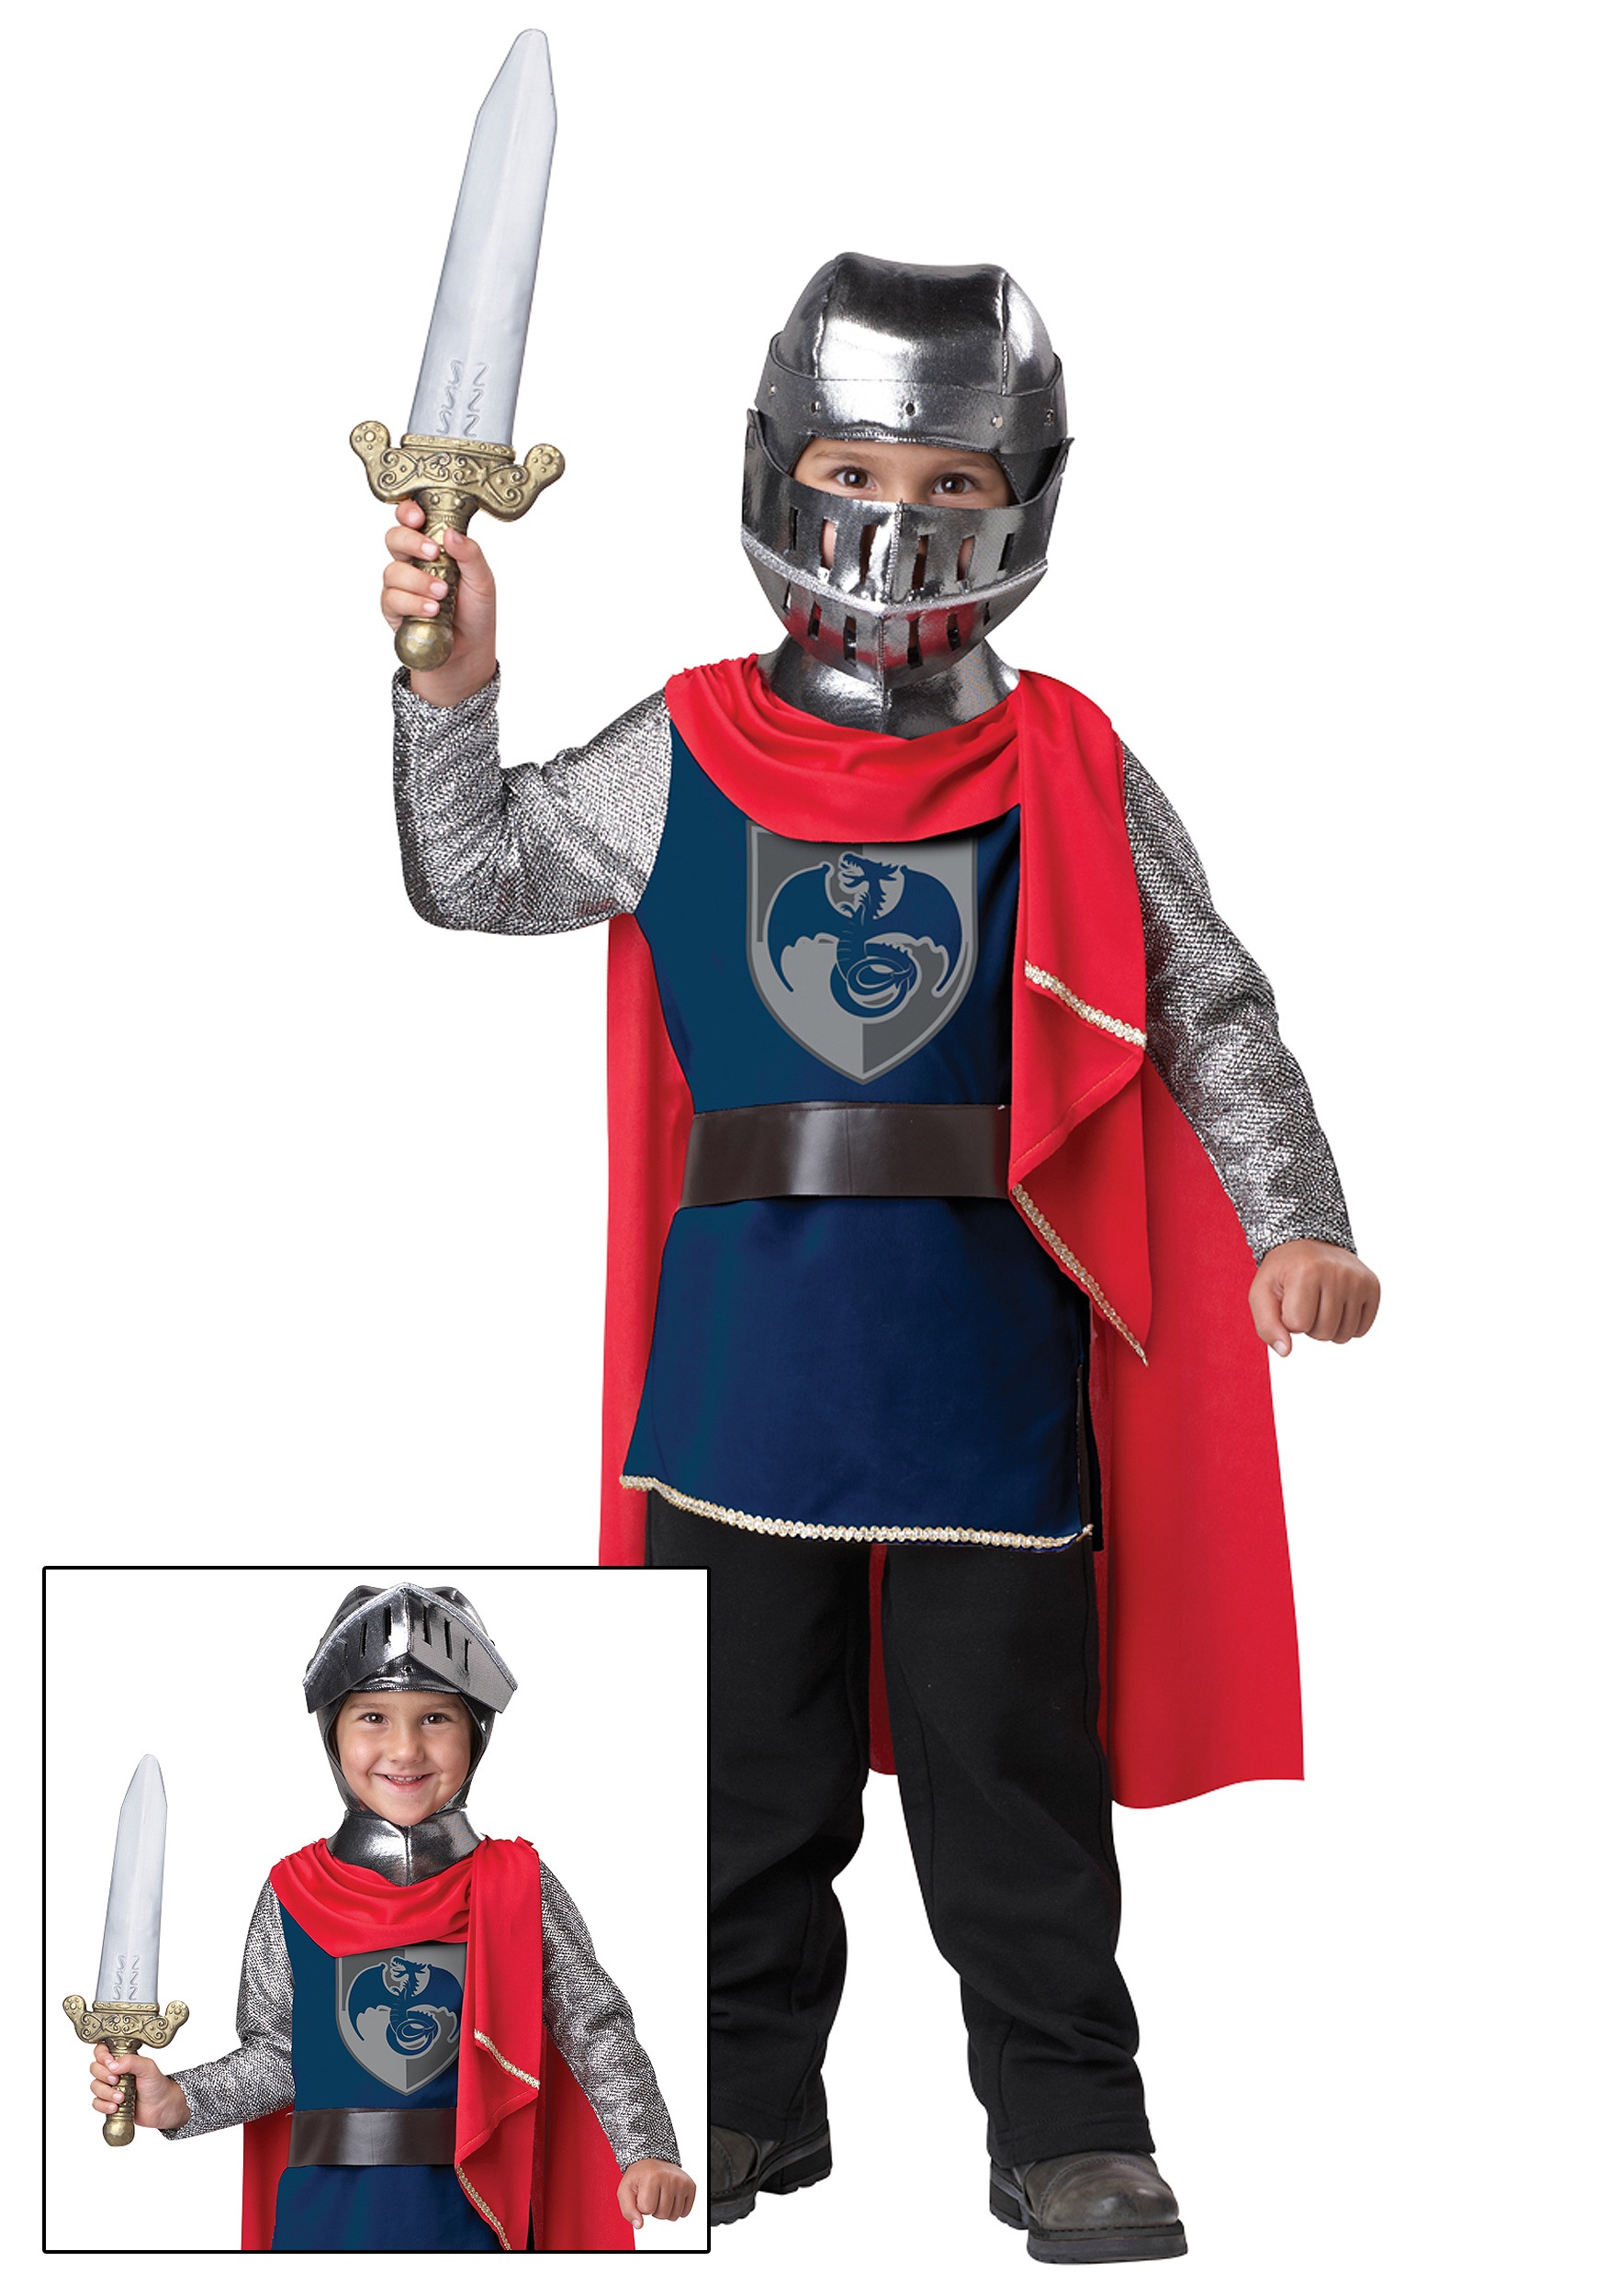 Valiant Knight Toddler Costume